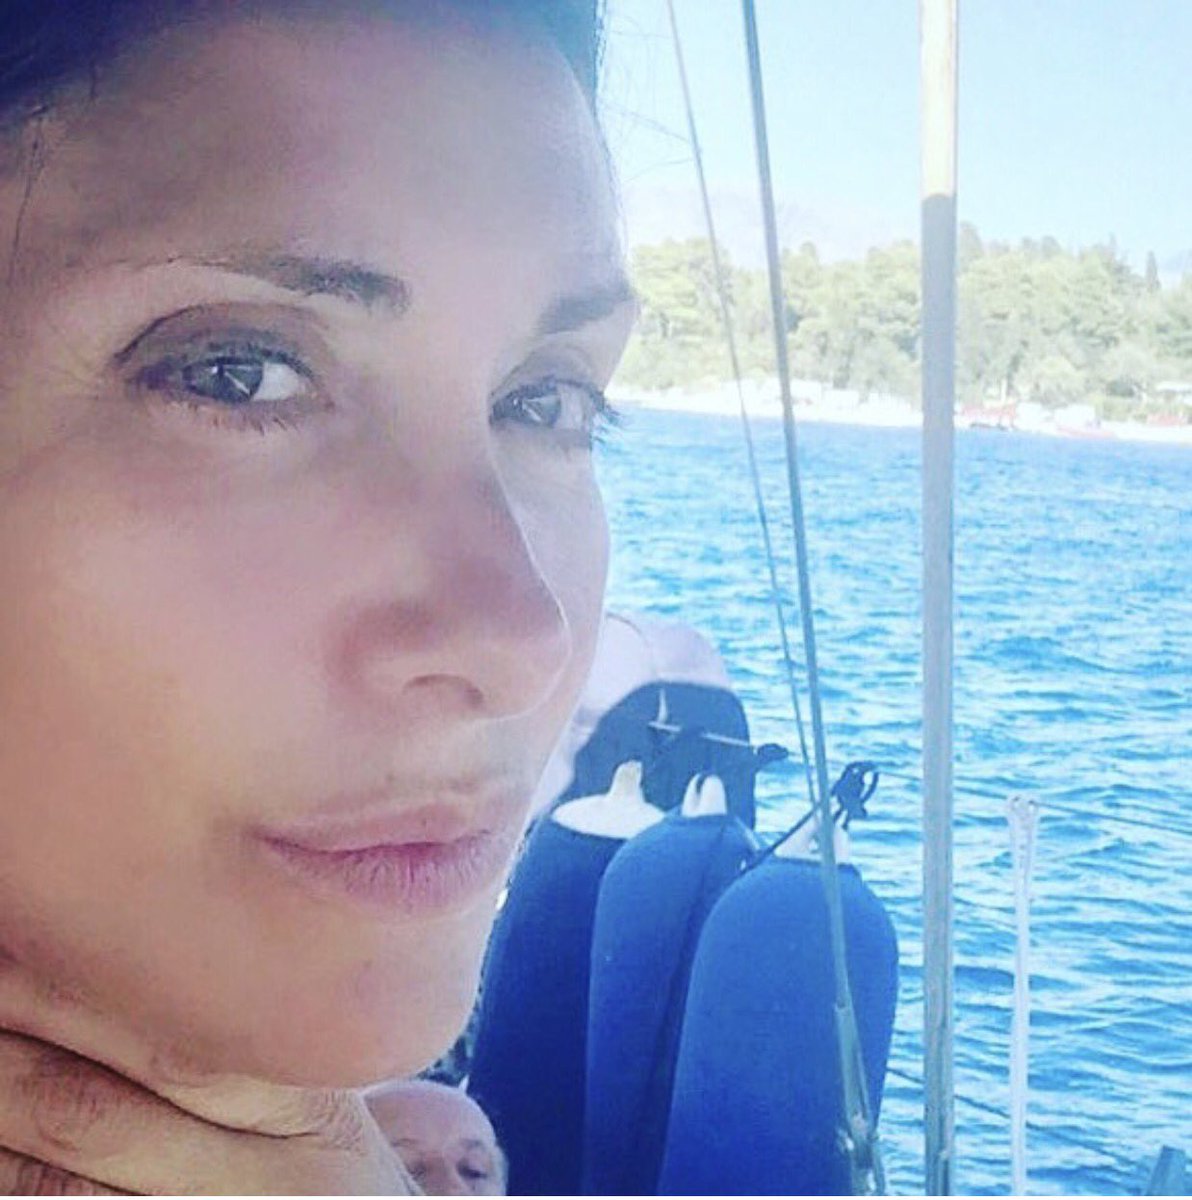 Destinazione #paxos #Greece #summertimelove #holiday #sea #boat #me #sabrinasalerno https://t.co/KFOQn8rpkt